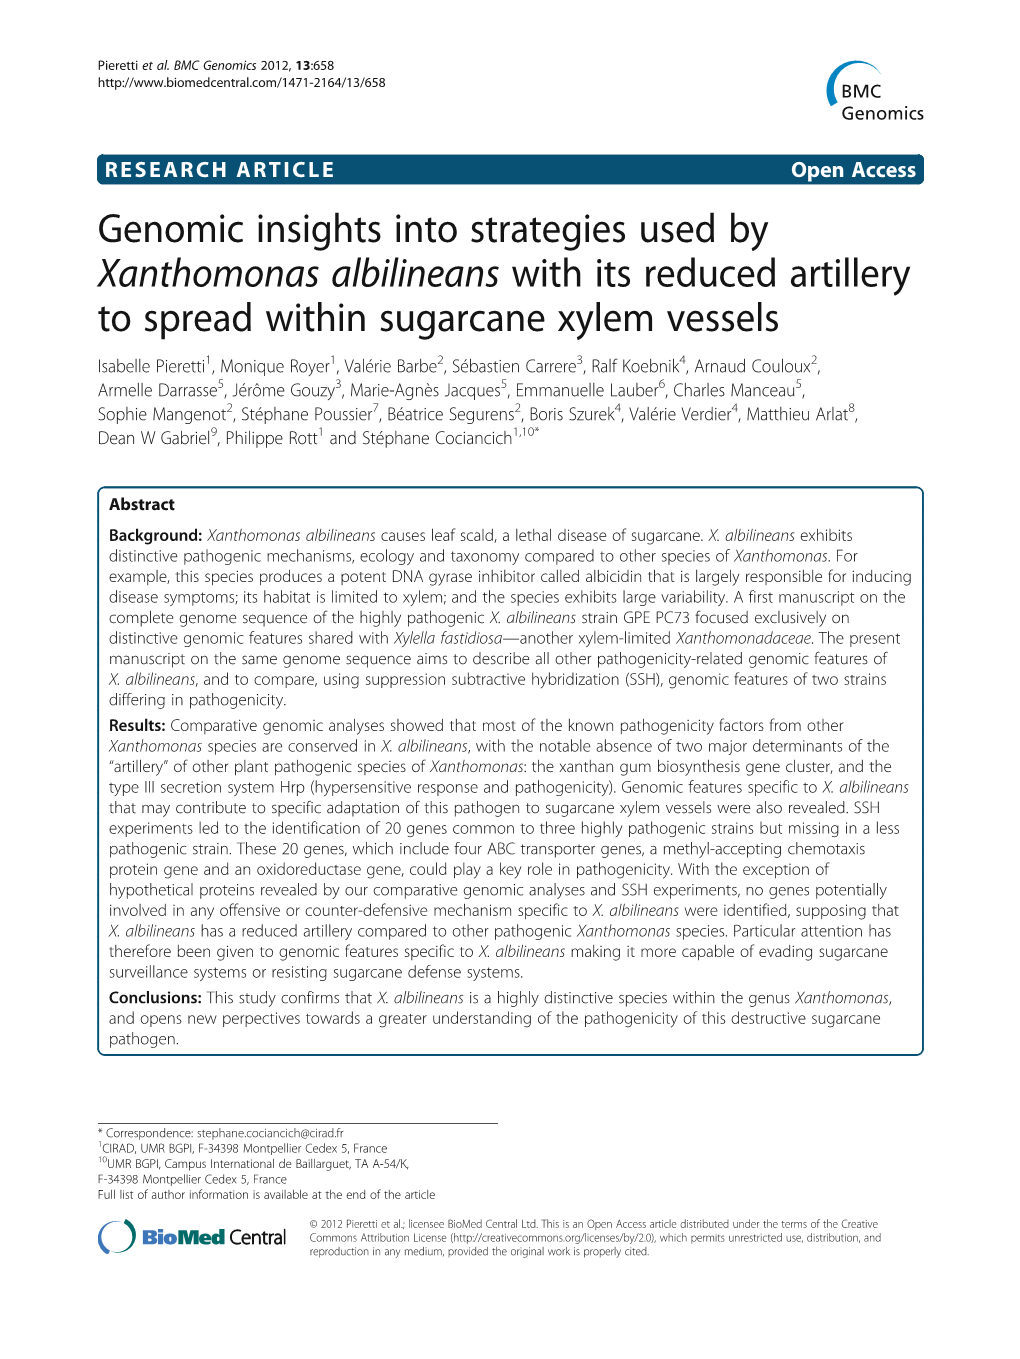 Genomic Insights Into Strategies Used by Xanthomonas